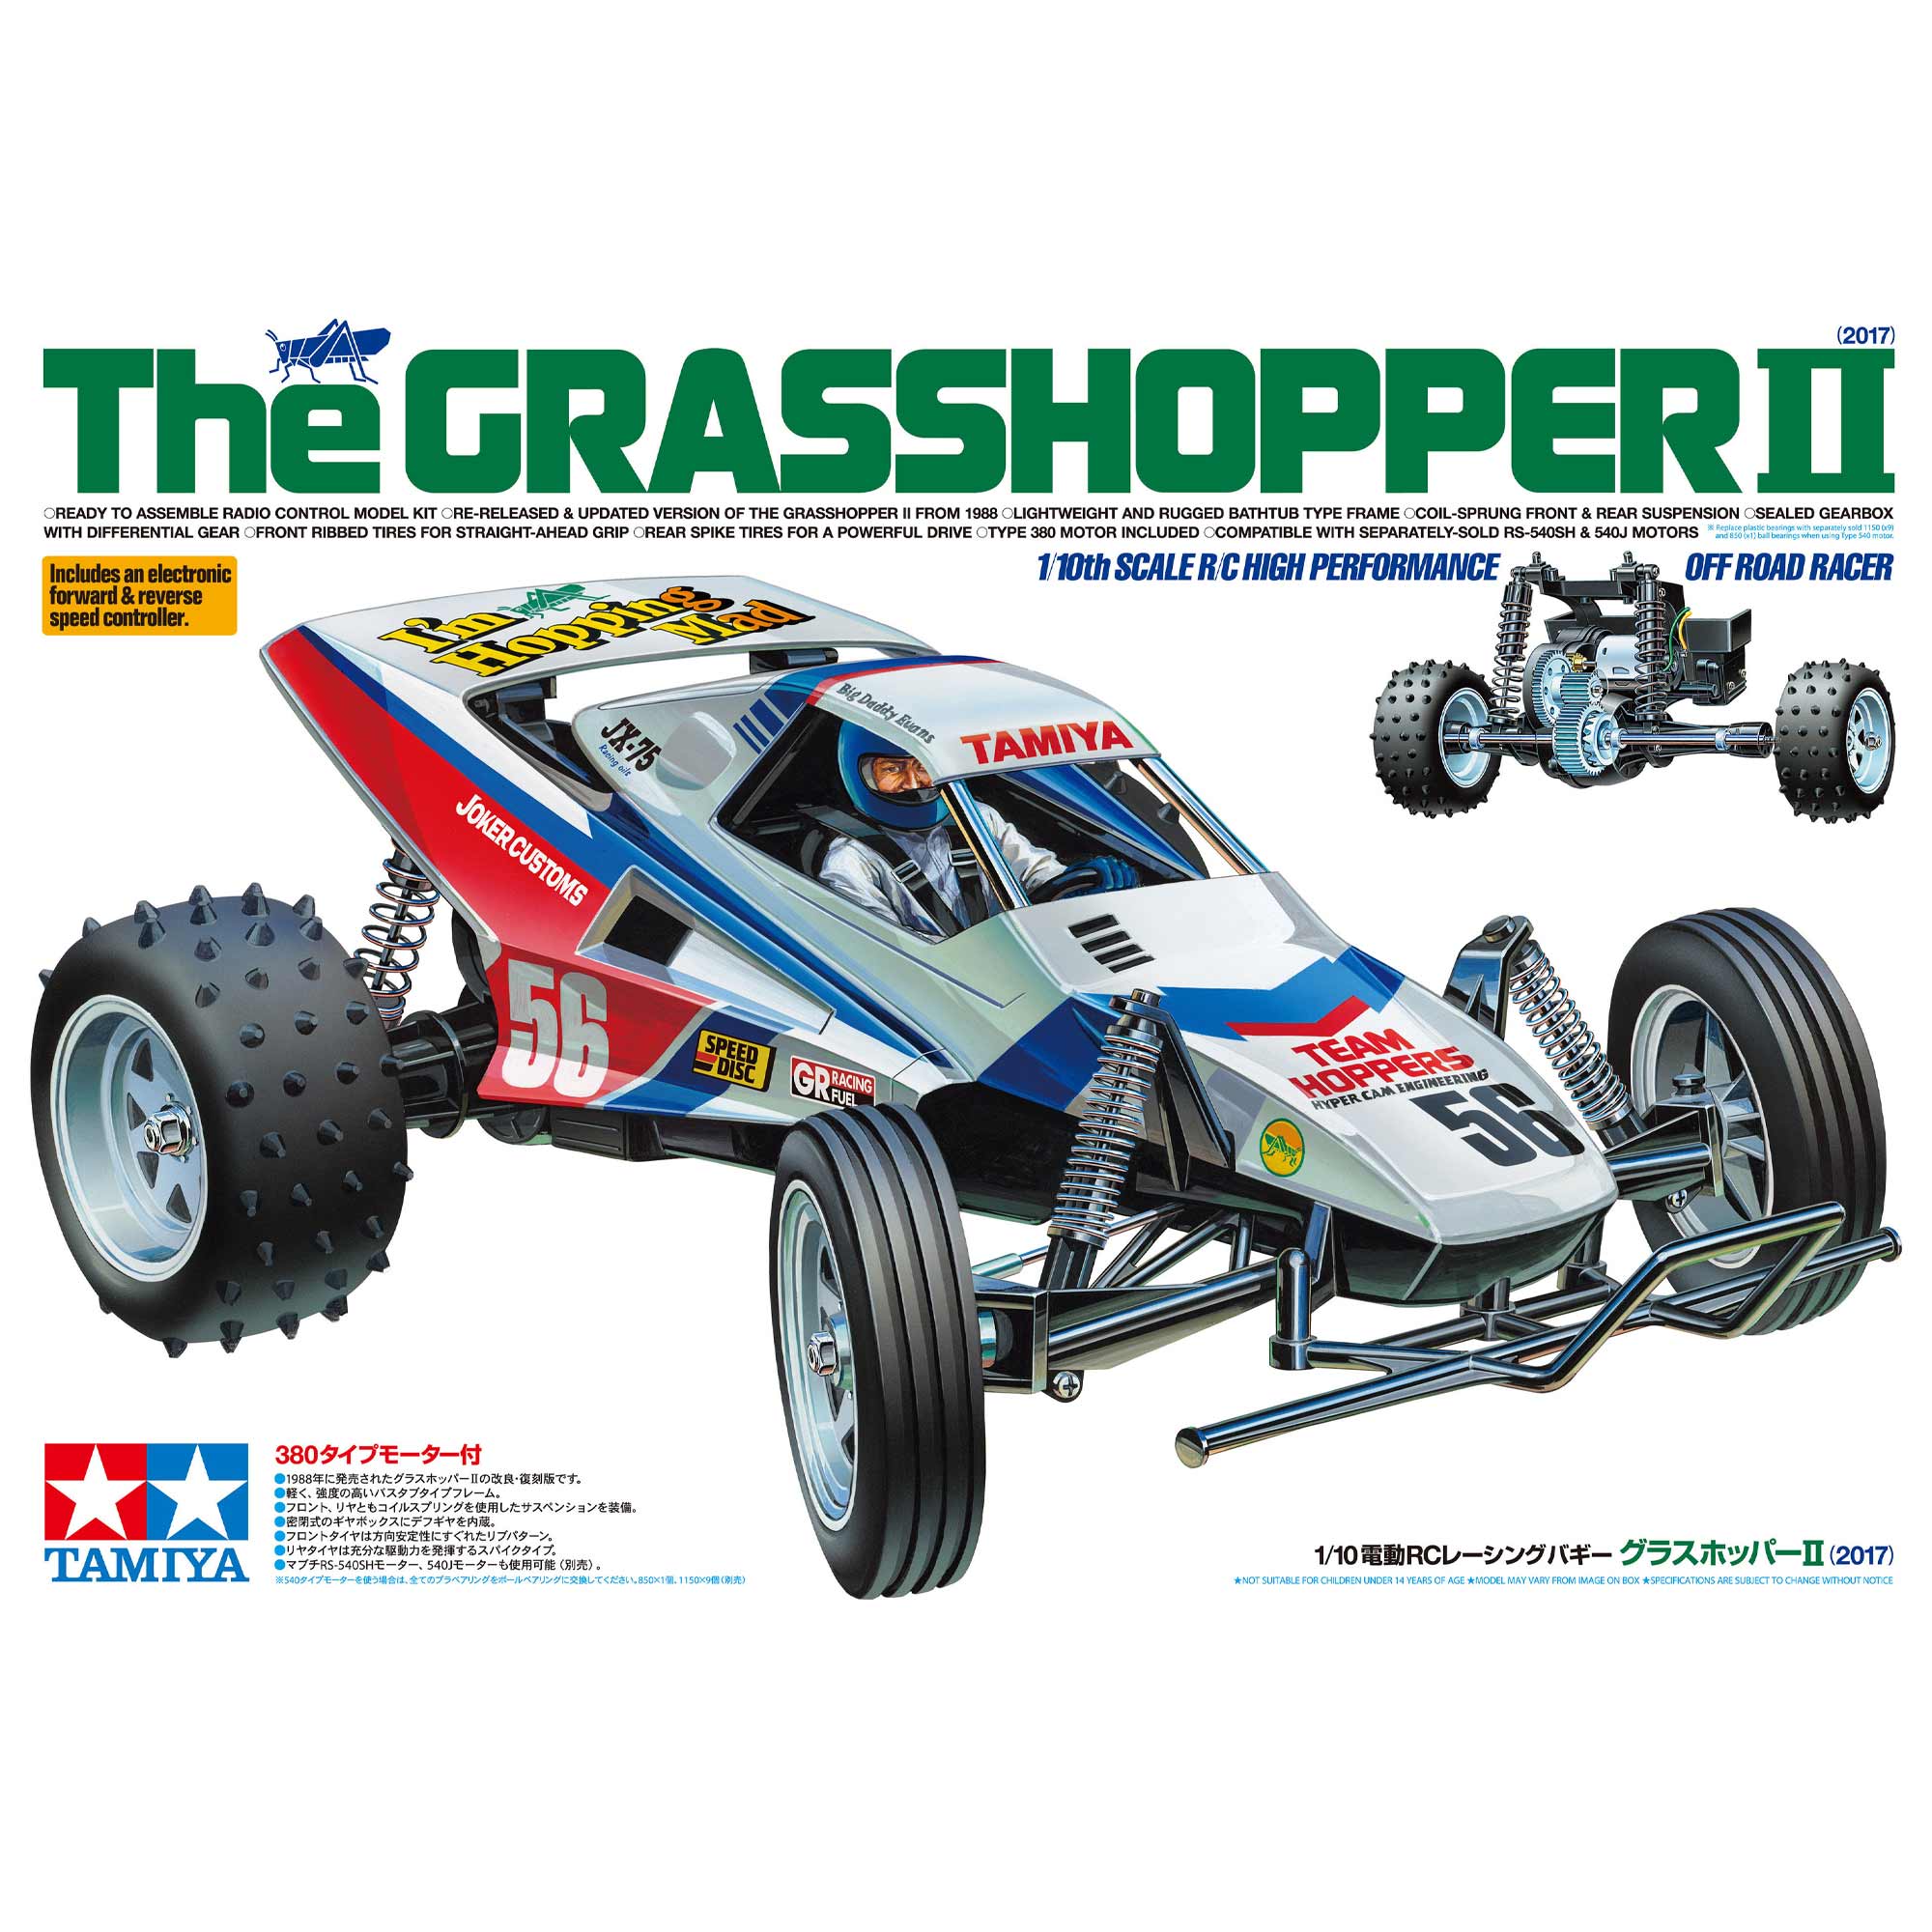 1/10 Grasshopper II 2WD Off-Road Buggy Kit (2017)